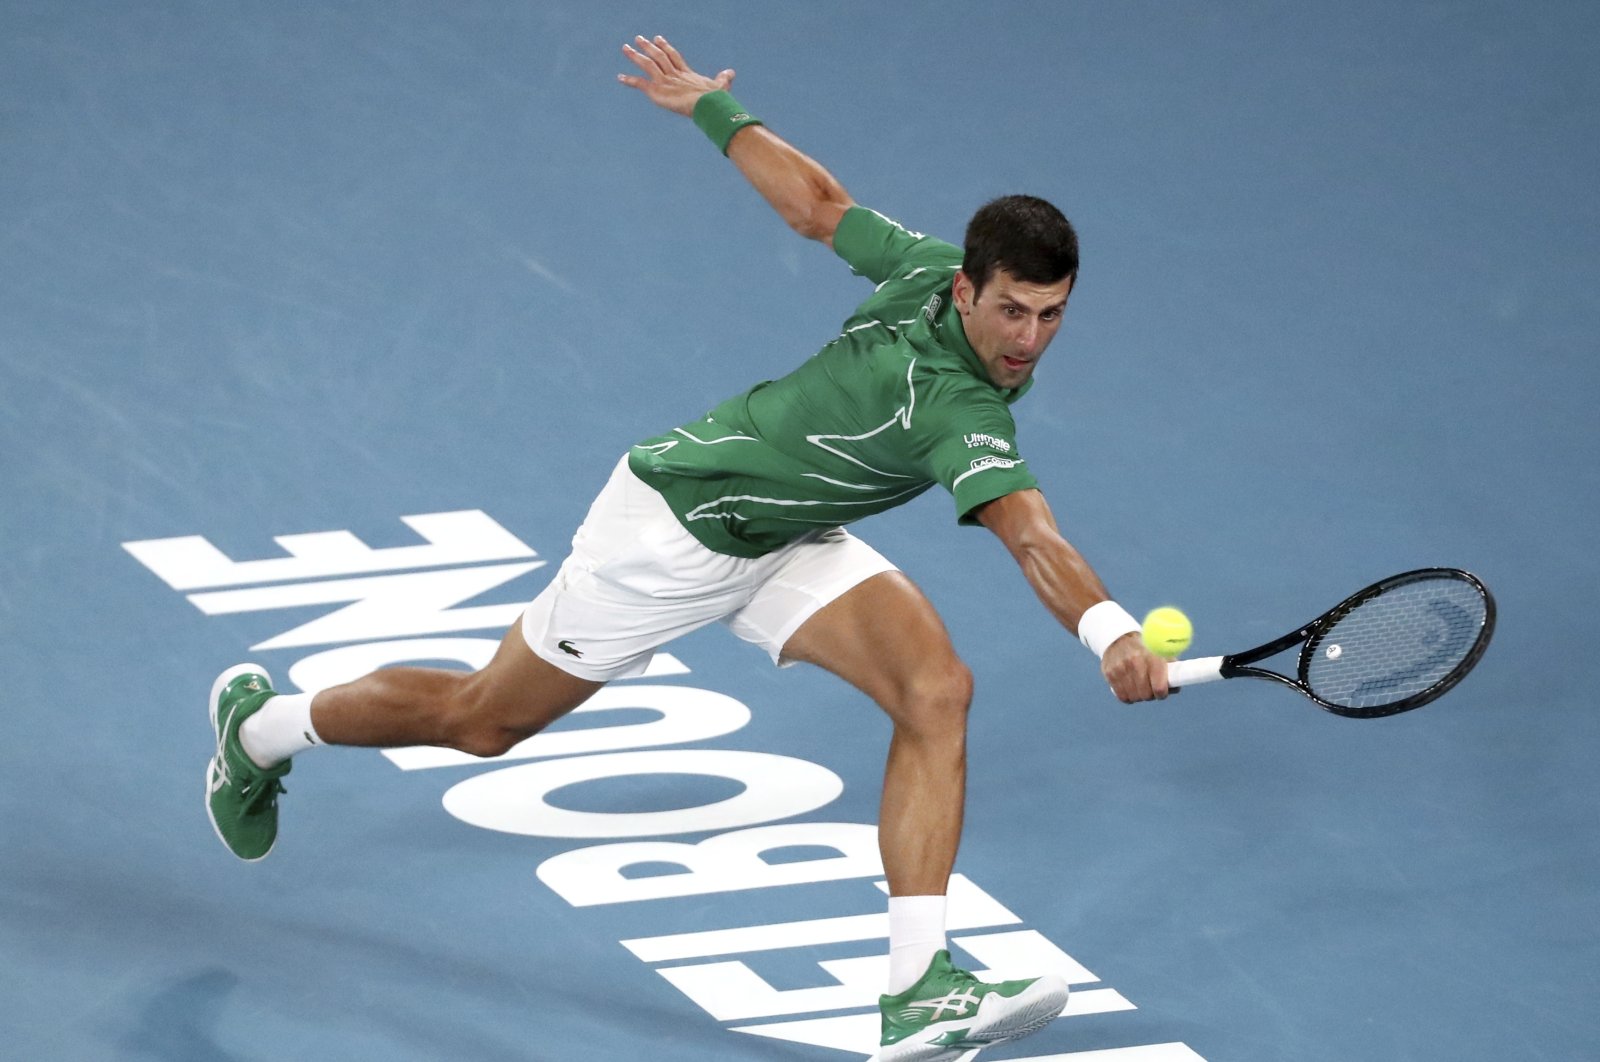 Novak Djokovic makes a backhand return to Dominic Thiem during the Australian Open final in Melbourne, Australia, Feb. 2, 2020. (AP Photo)